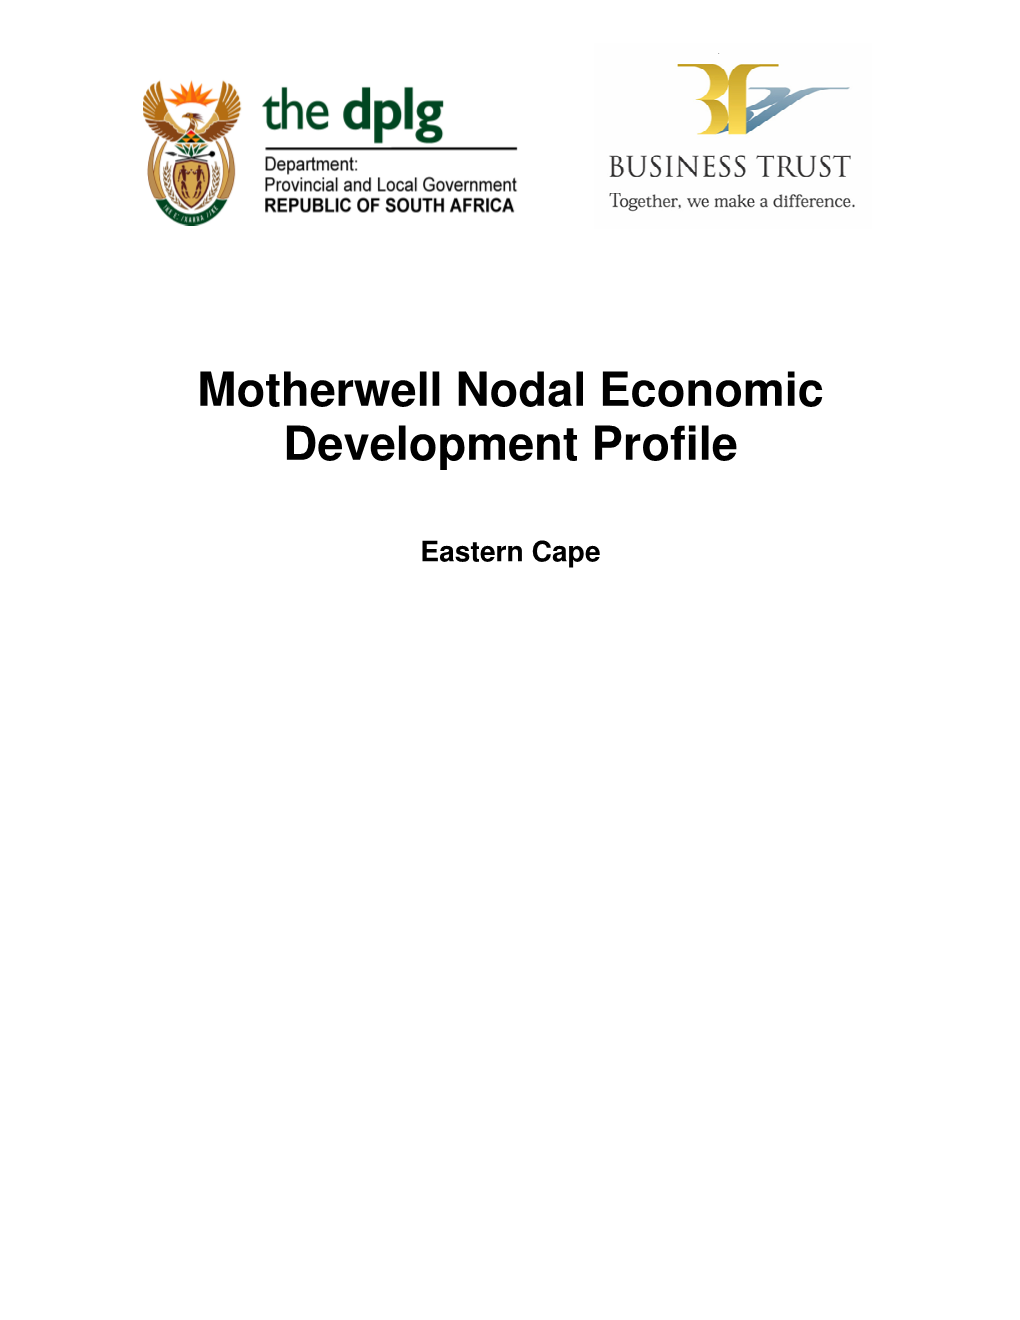 Motherwell Nodal Economic Development Profile